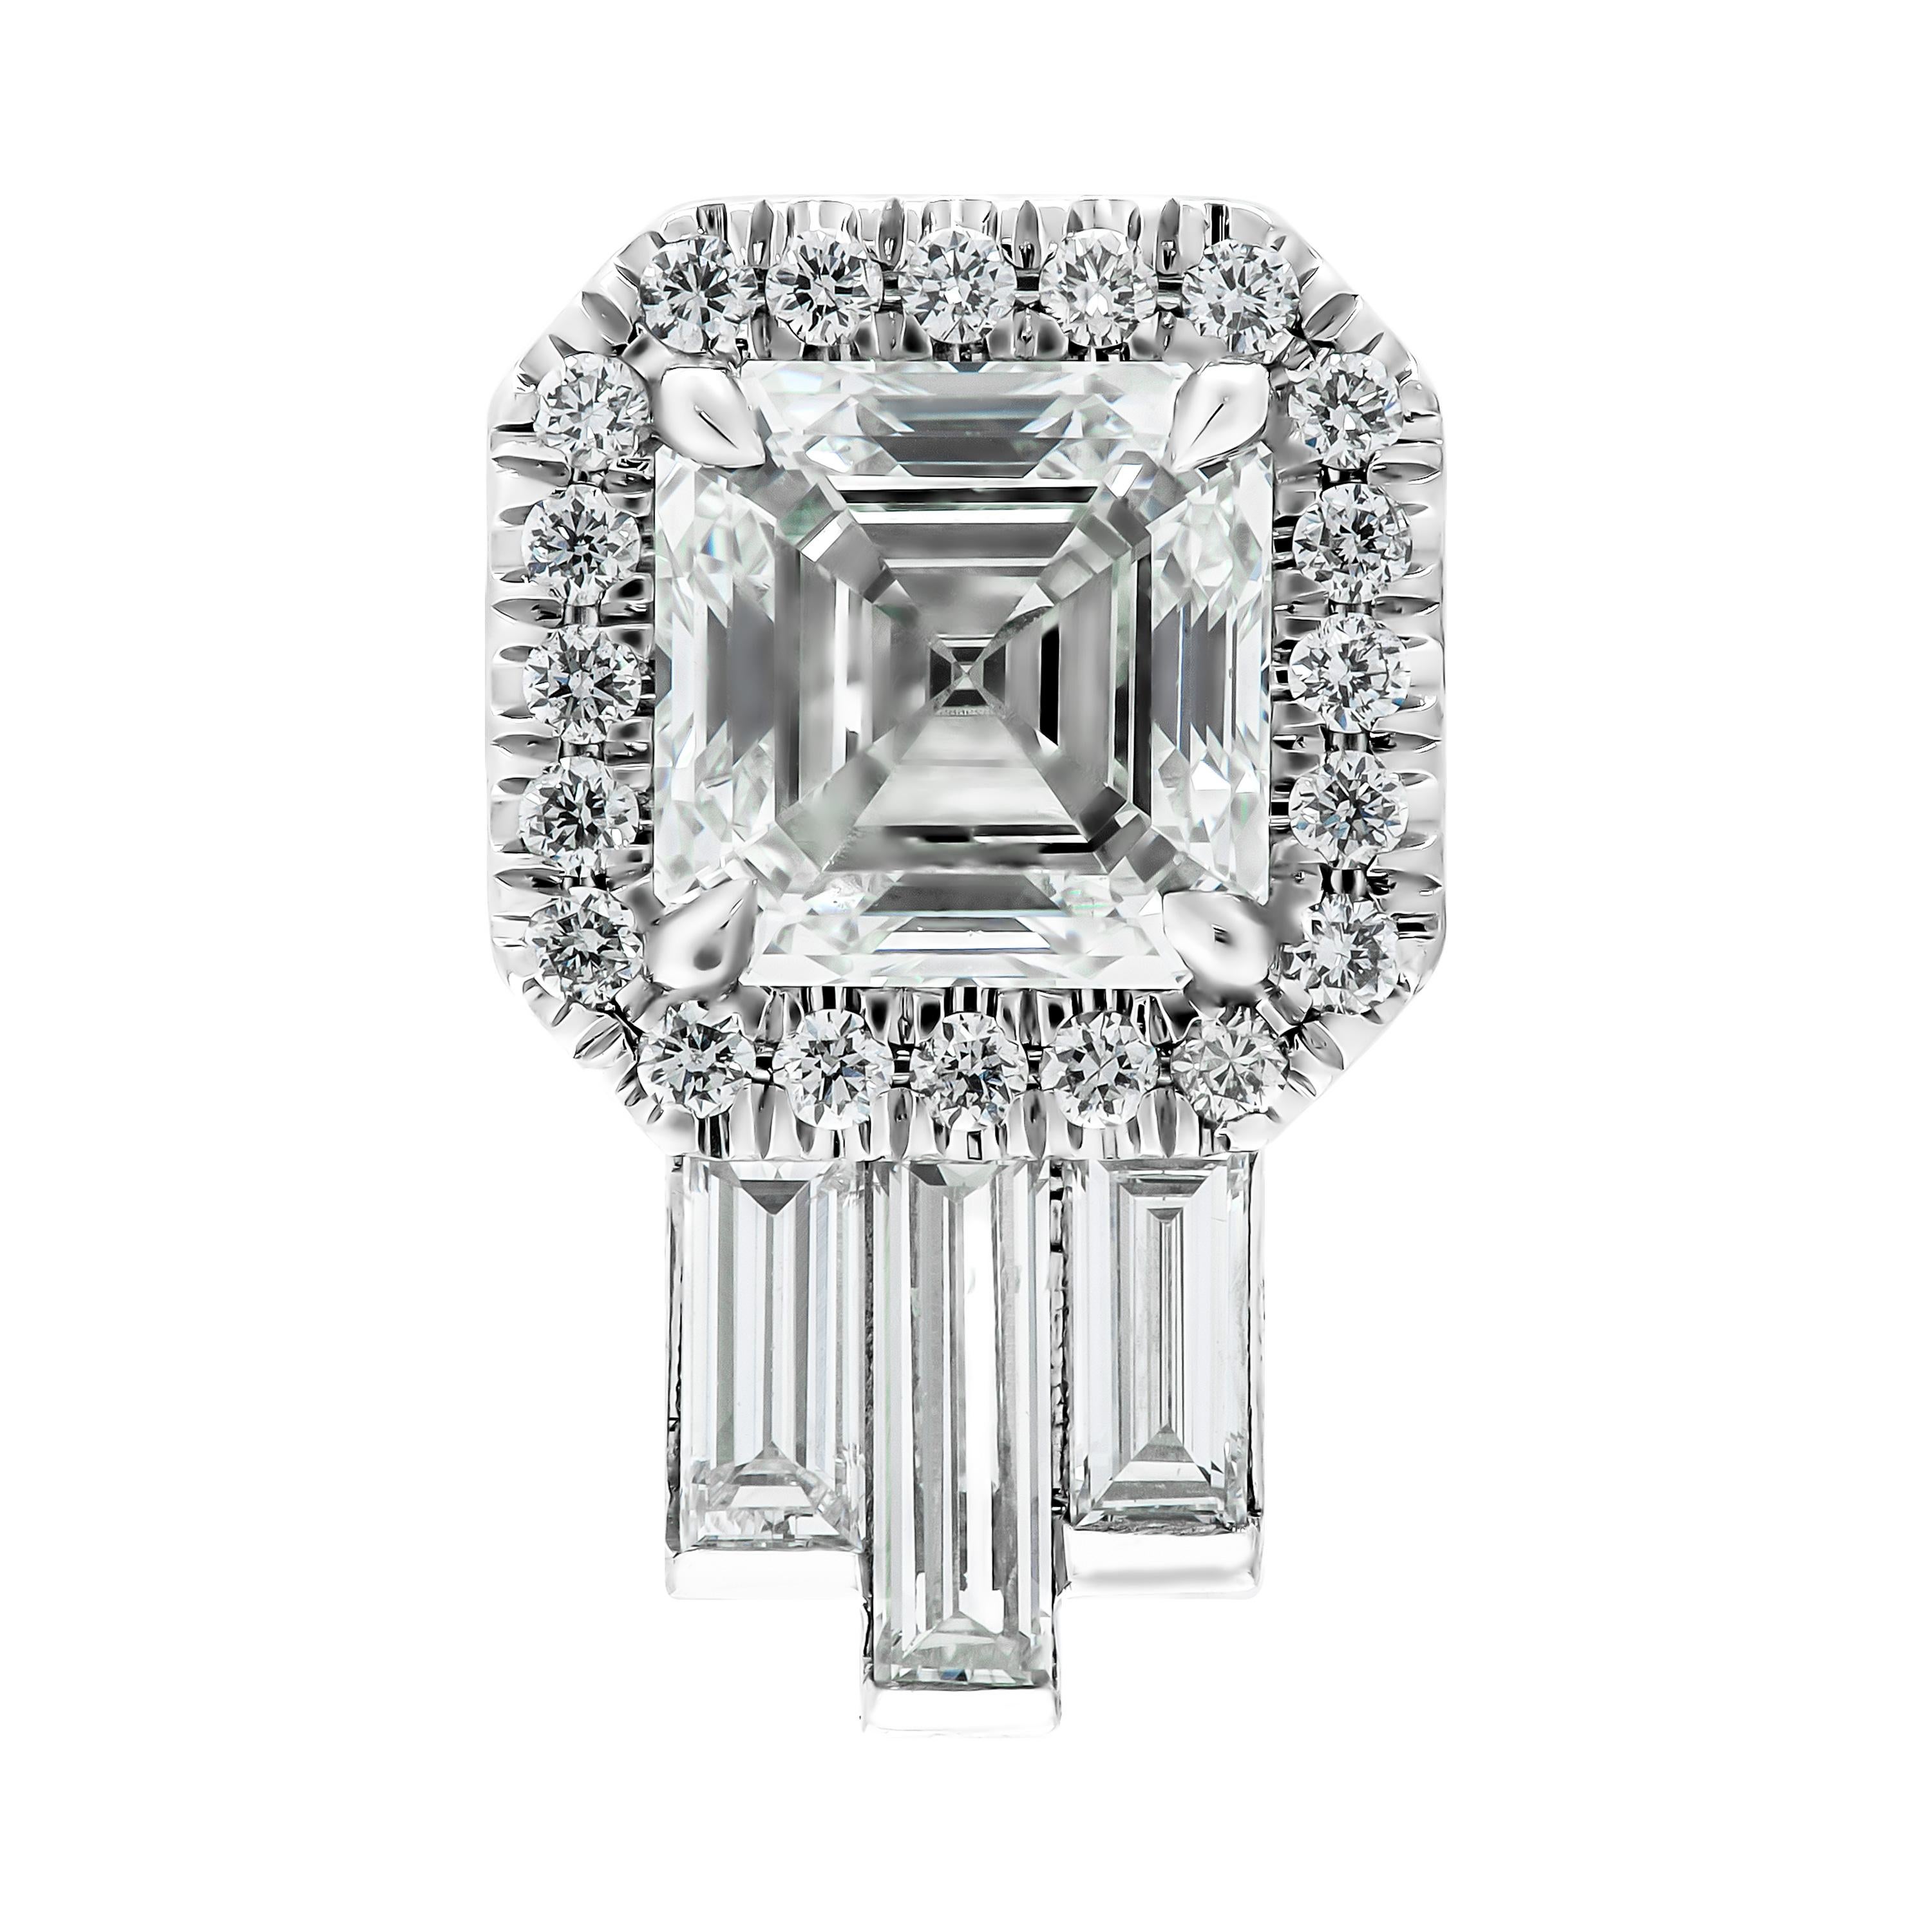 Diamond Earrings with Asscher Cut GIA Certified Diamonds 0.91 ct & 0.92 ct stones: 
                                    0.91ct I VVS1 Square Emerald Shape Diamond GIA#6432231835 
                                    0.92ct I VS1 Square Emerald Shape